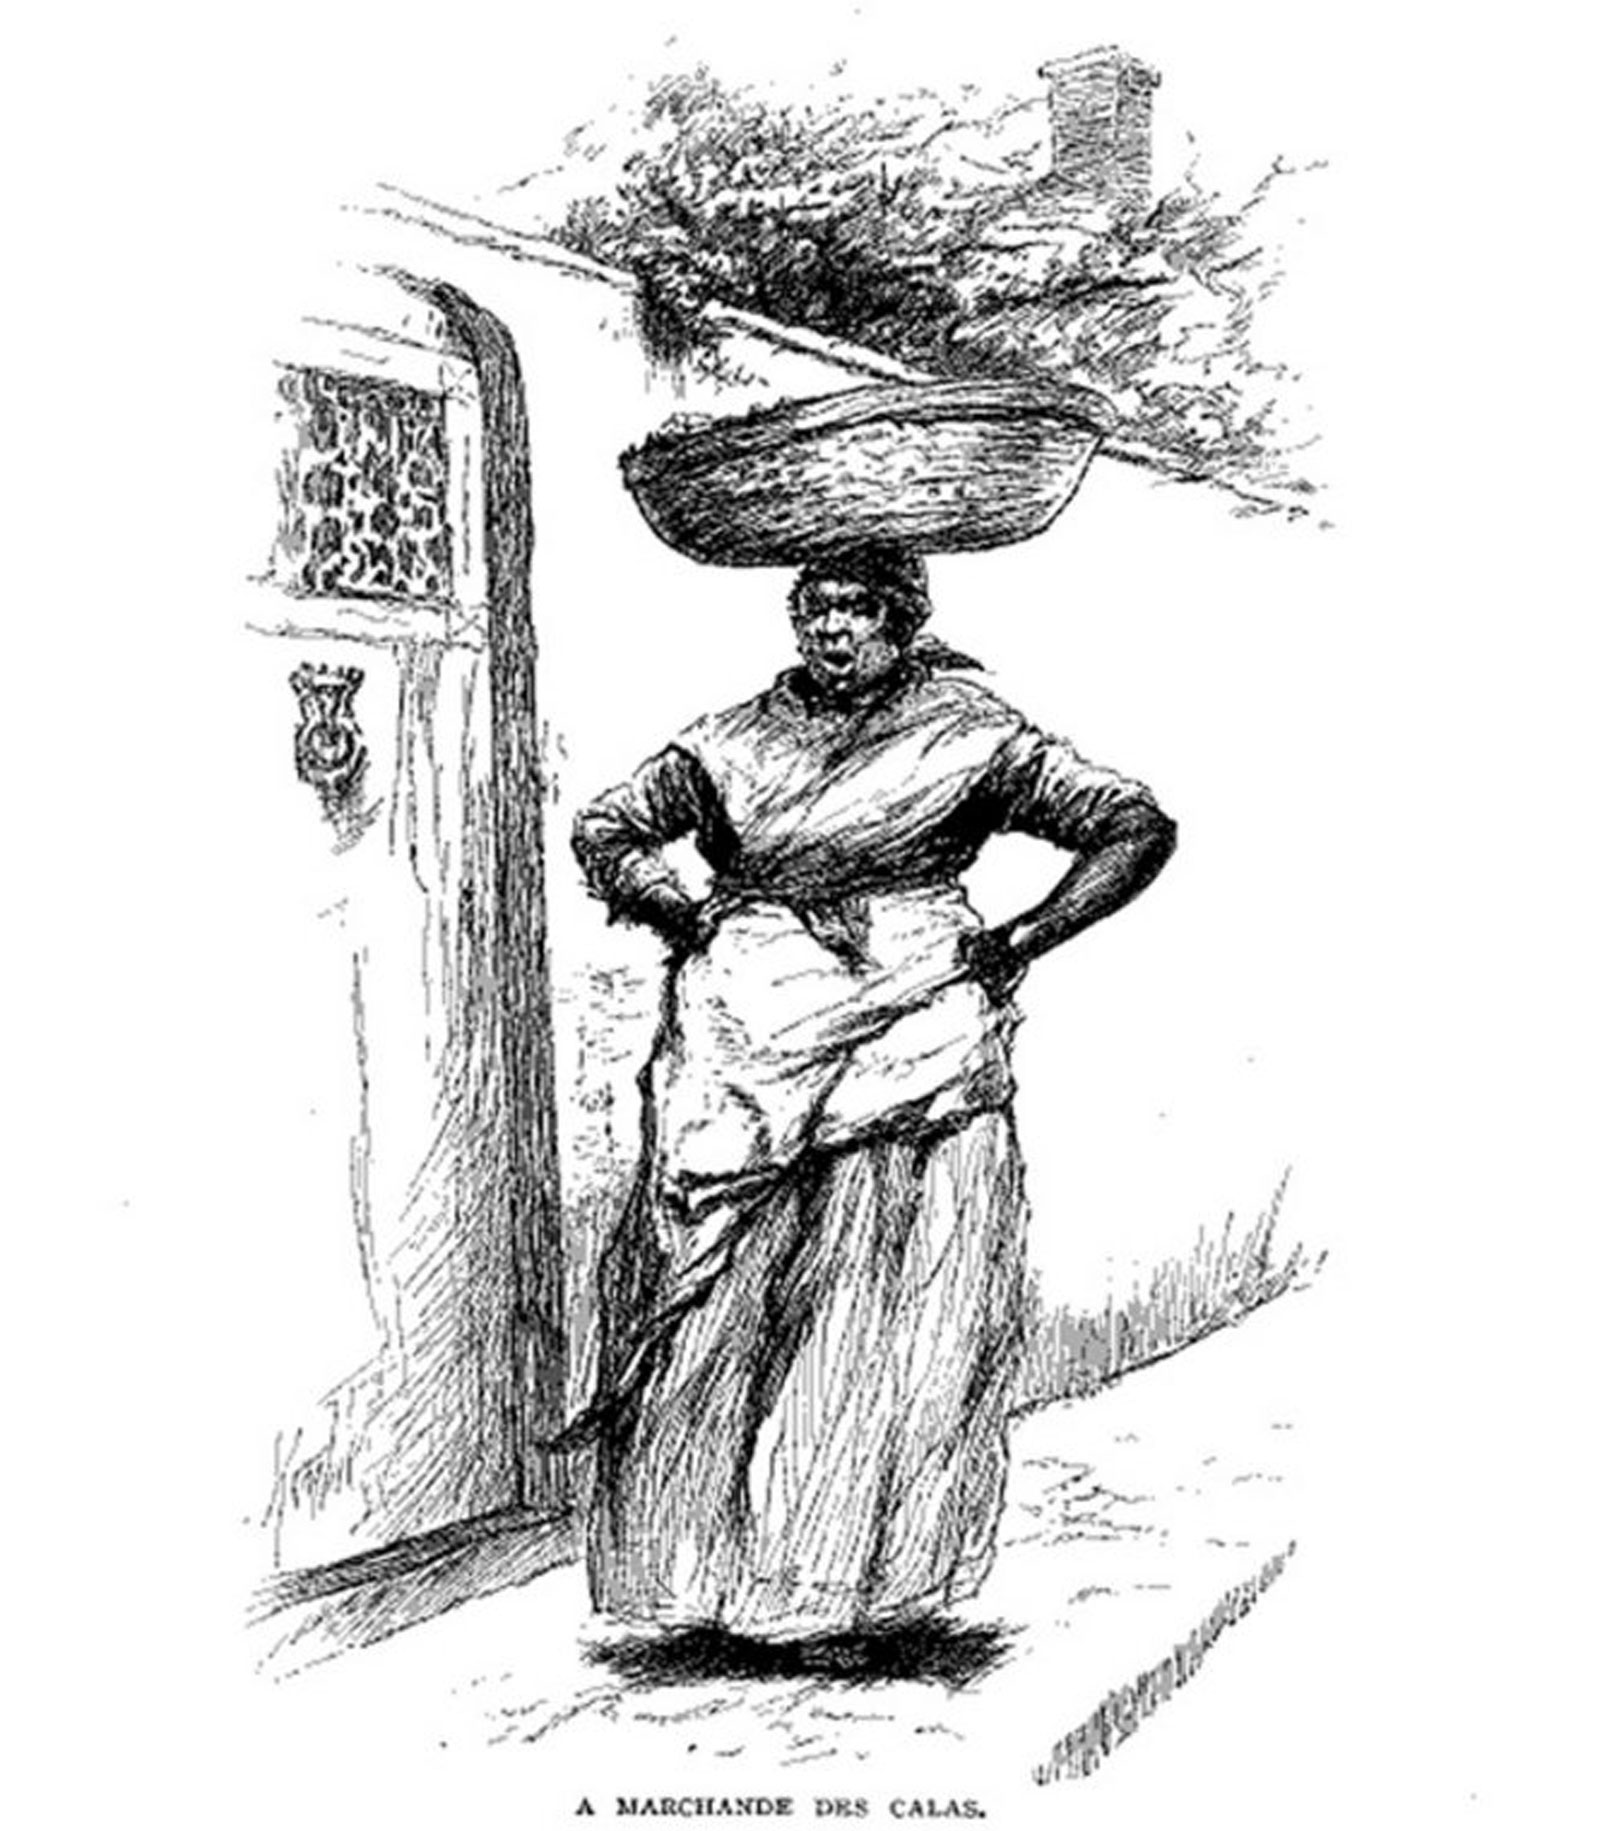 A Marchande des Calas (Calas vendor), 1886, Century Magazine